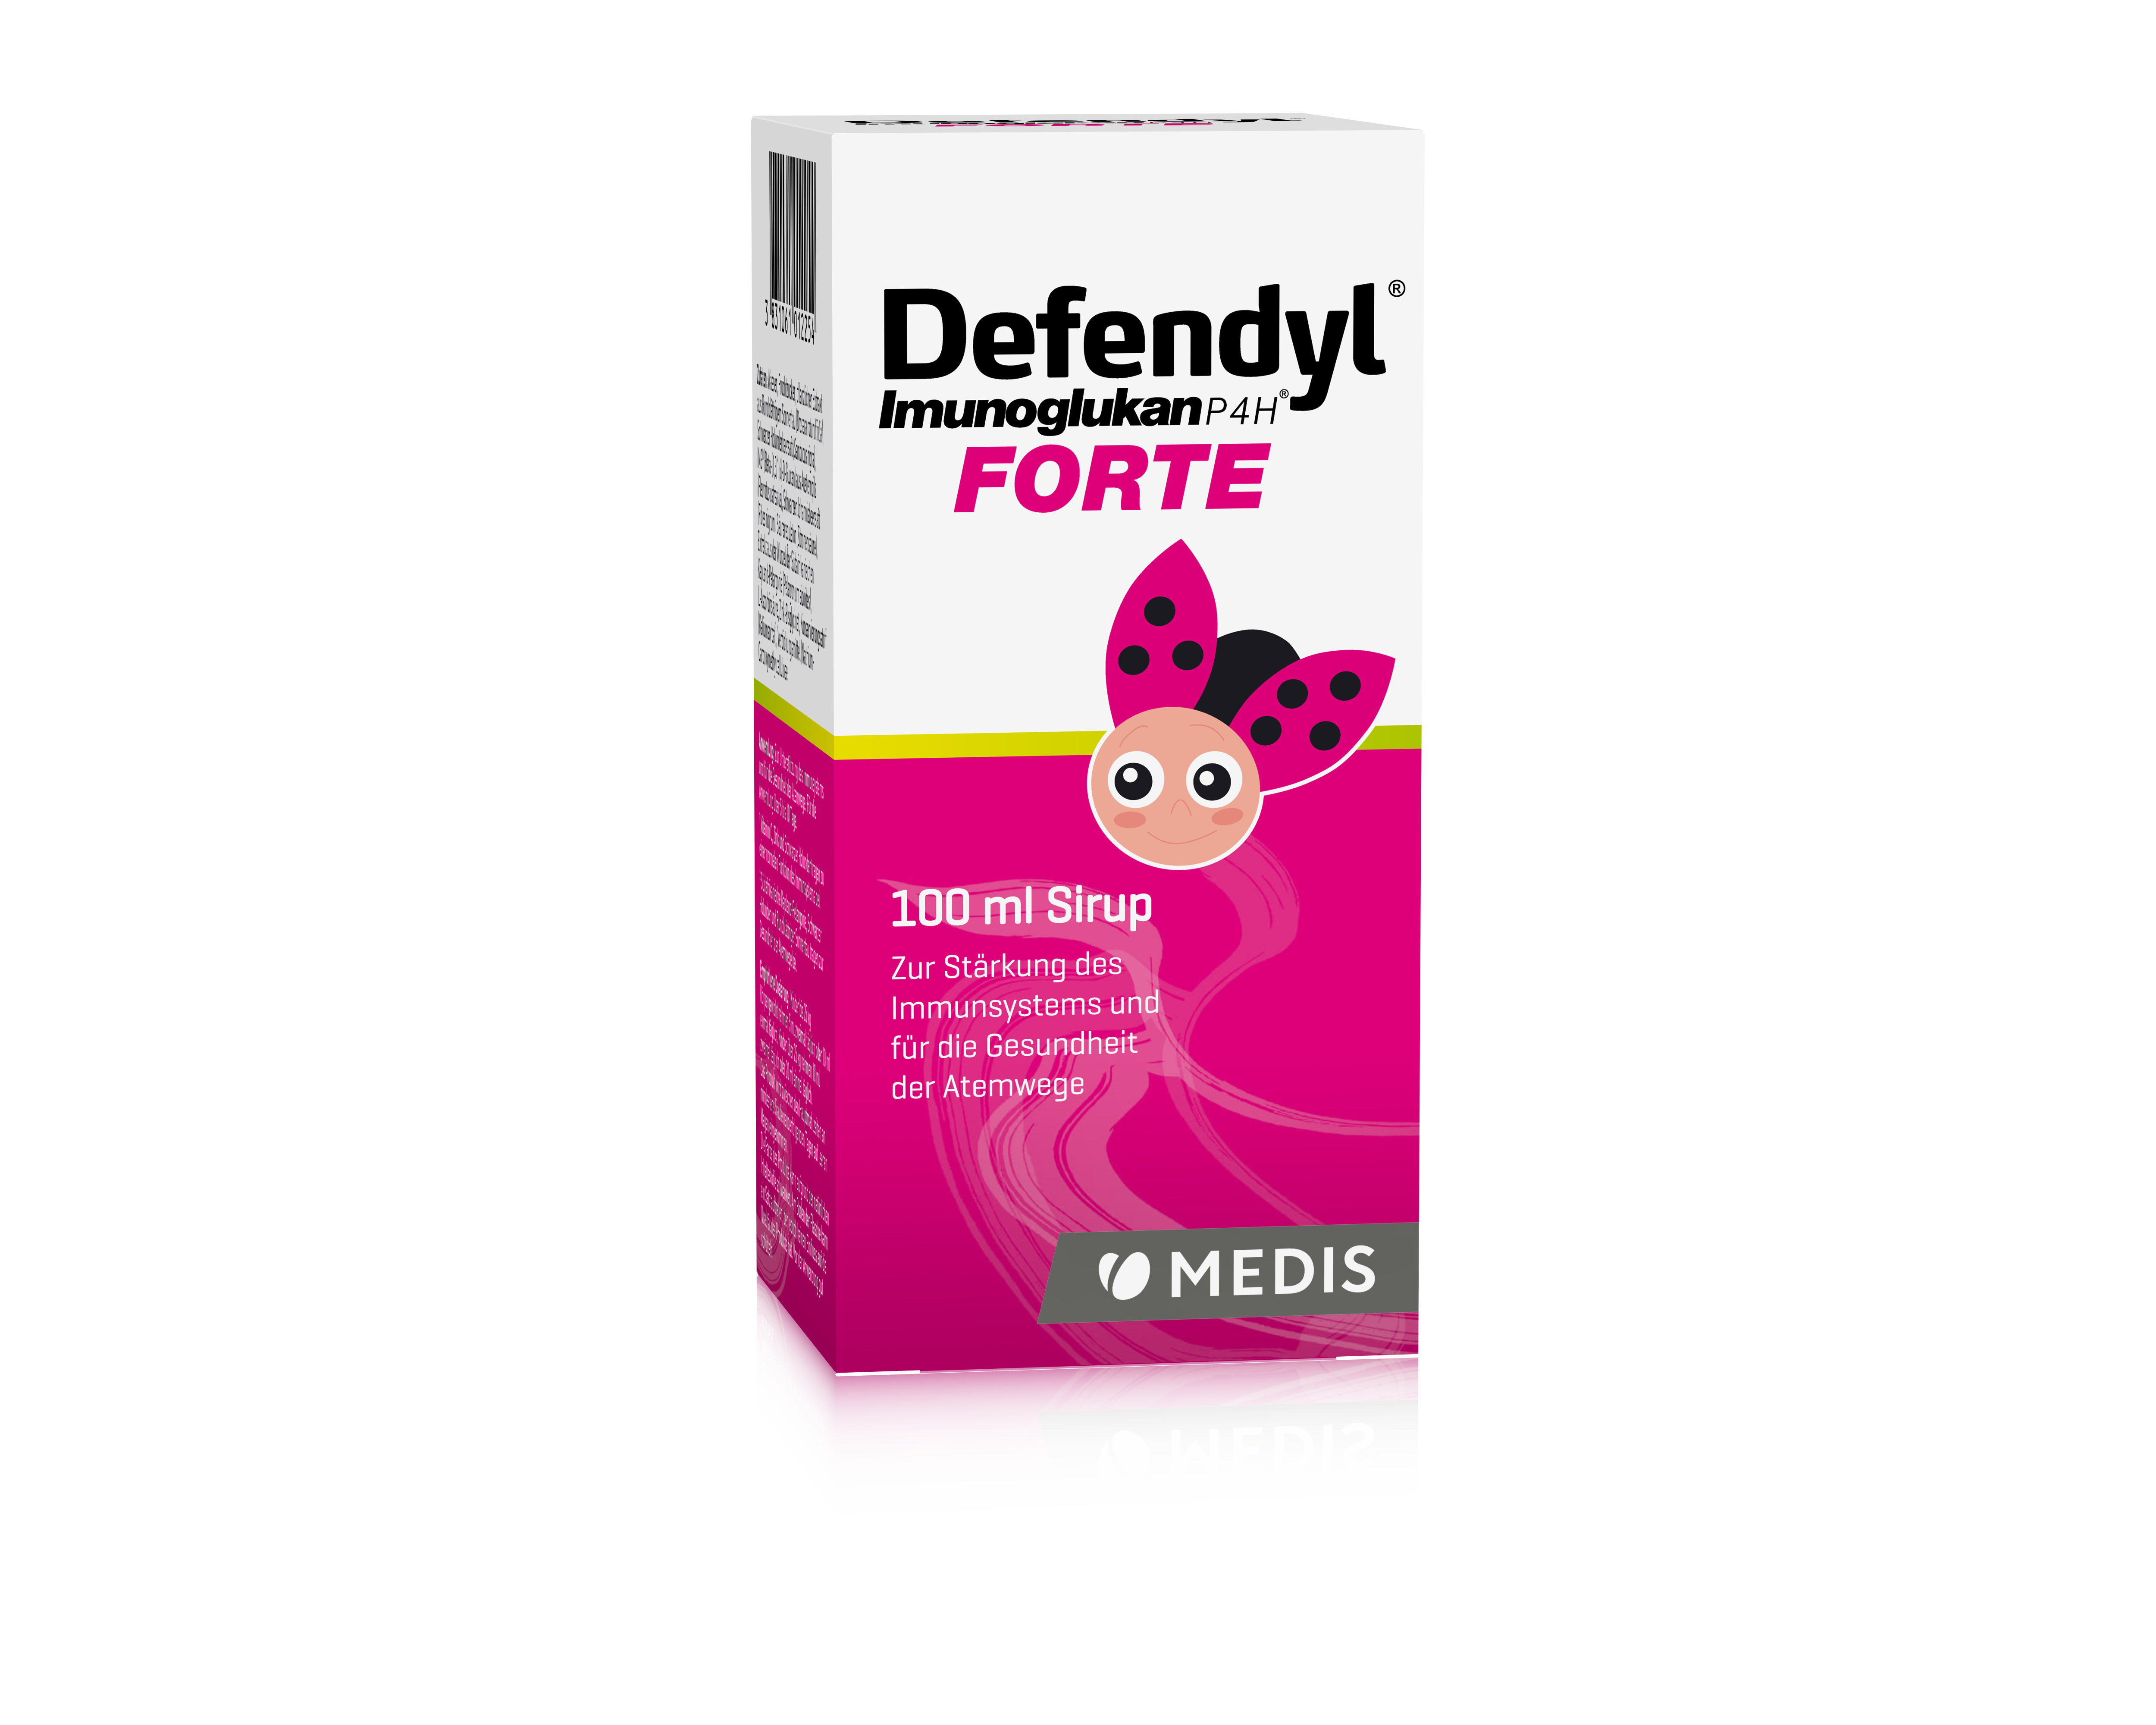 Defendyl-Imunogulkan P4H® FORTE Sirup